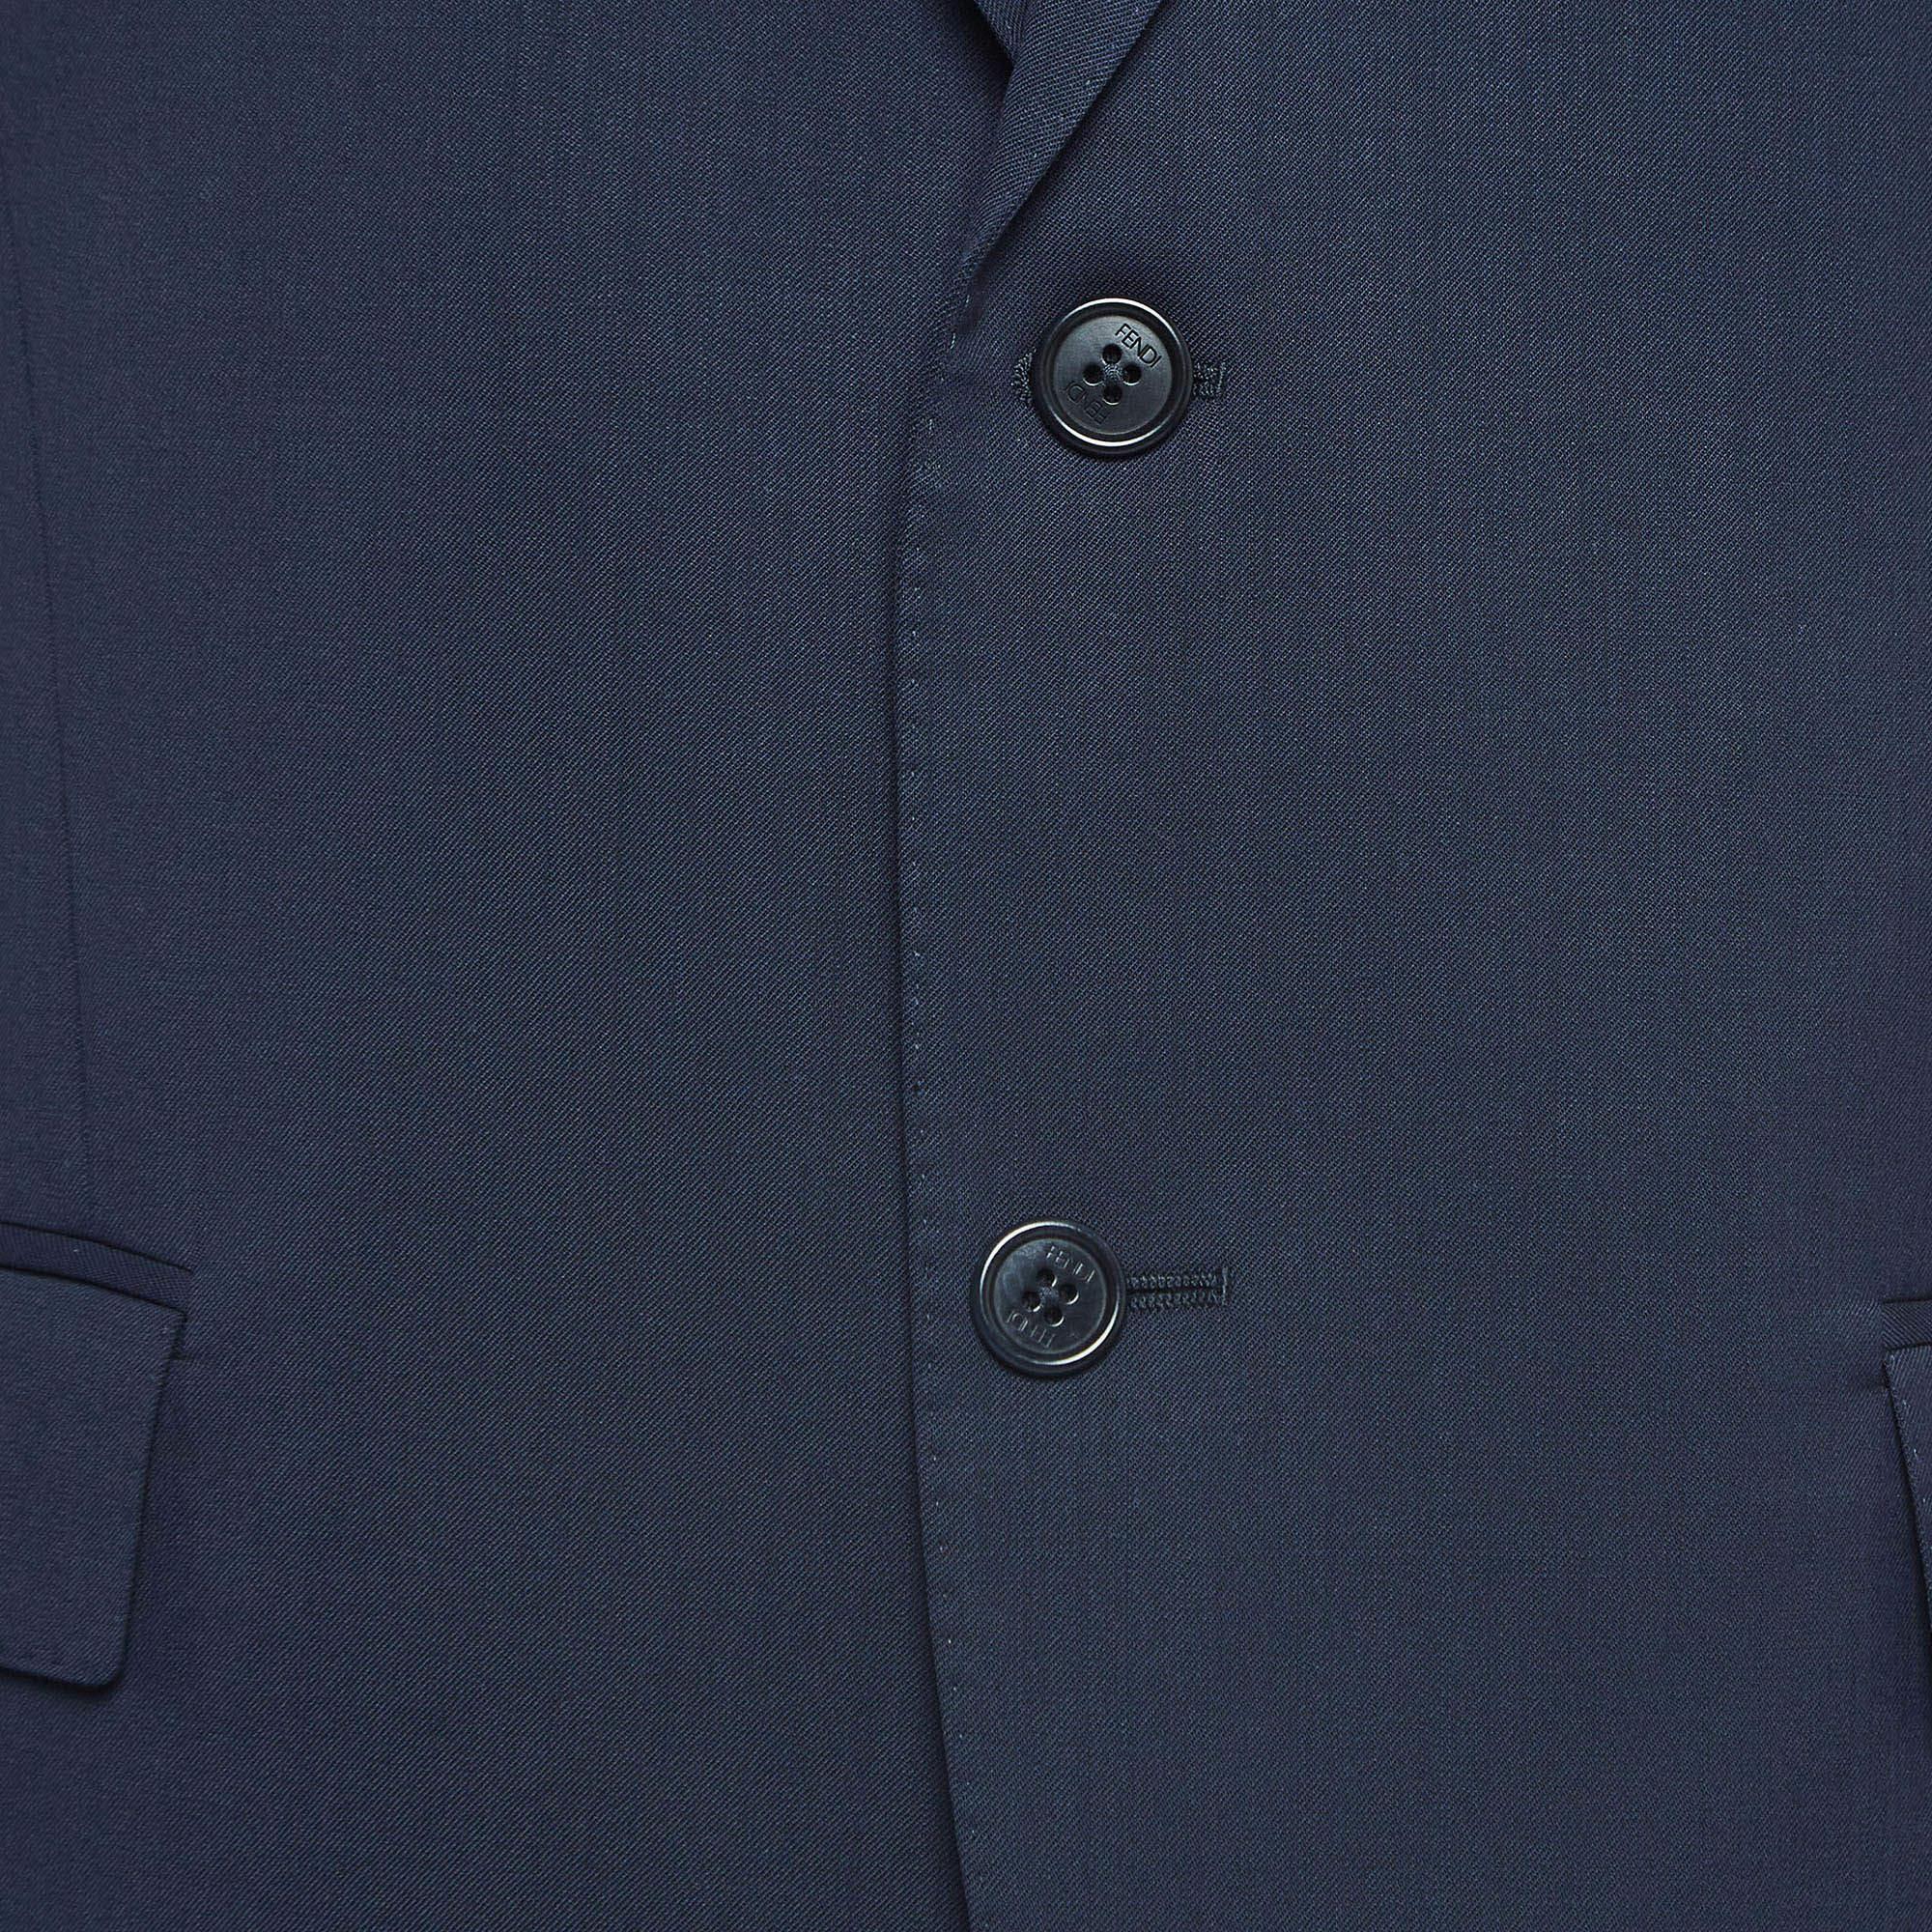 Fendi Navy Blue Wool Single Breasted Suit L In Excellent Condition For Sale In Dubai, Al Qouz 2